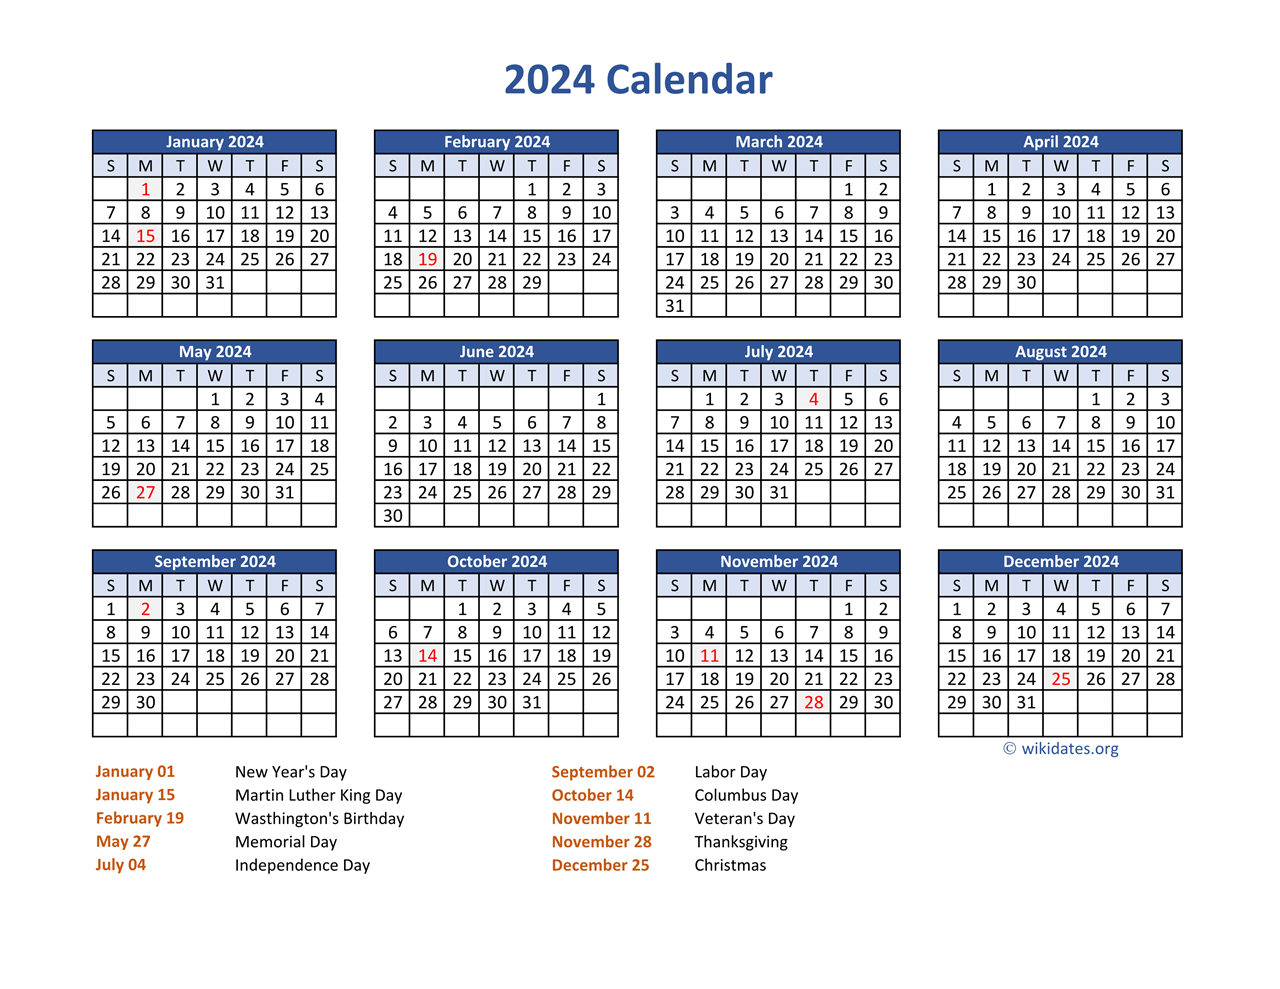 Pdf Calendar 2024 With Federal Holidays | Wikidates | Printable Calendar 2024 Wiki